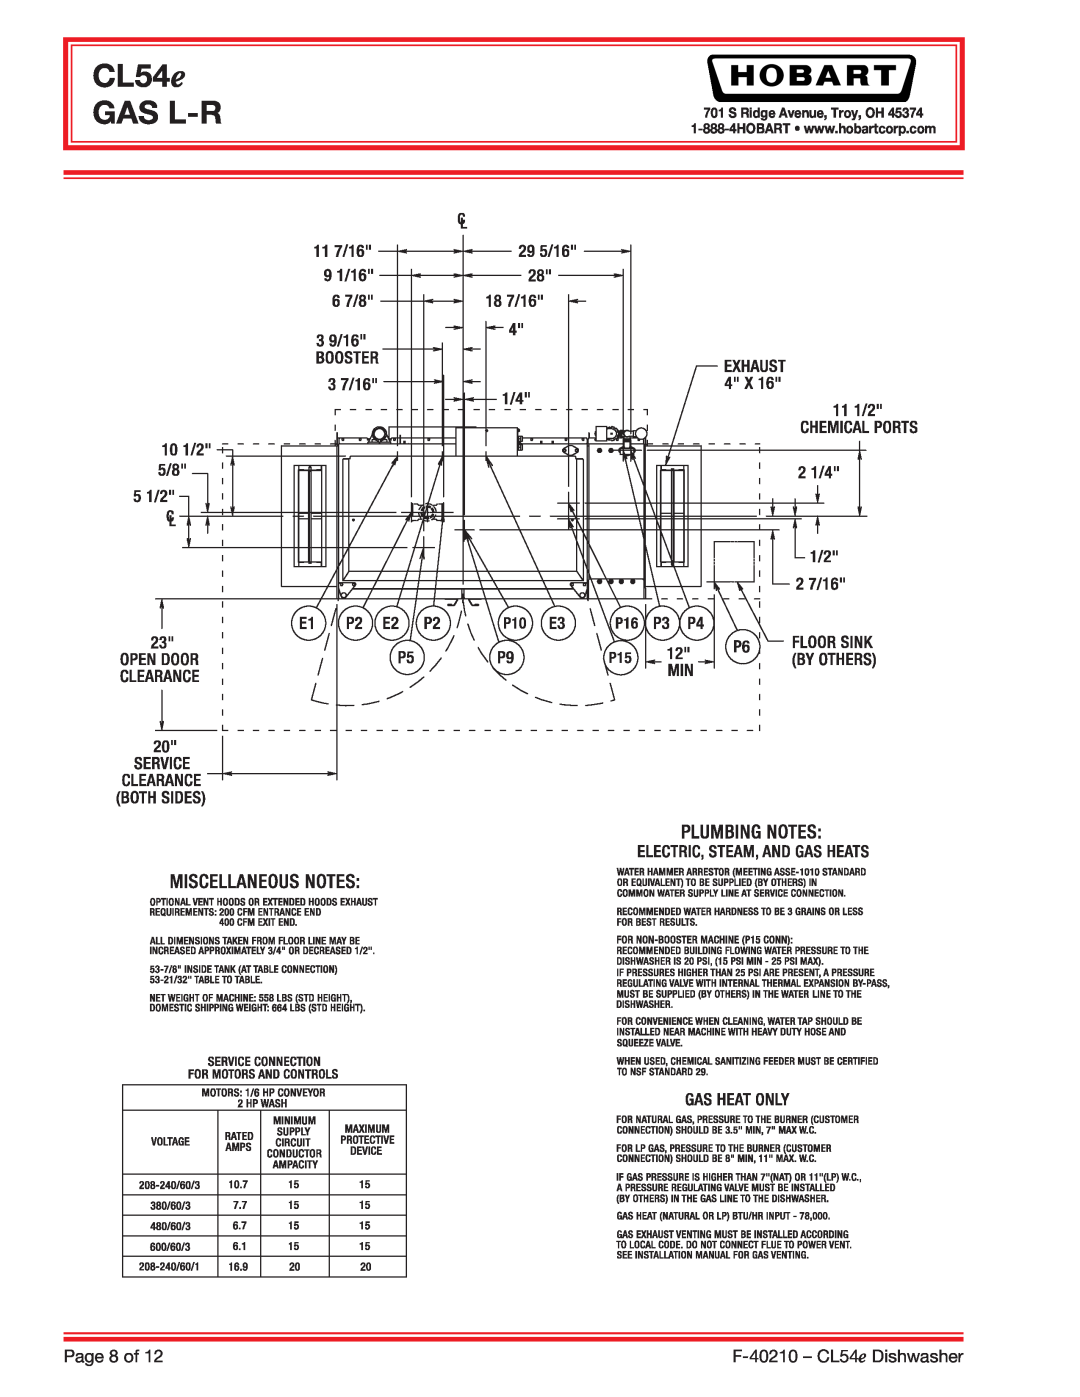 Hobart CL54E dimensions CL54e GAS L-R, Page 8 of, F-40210- CL54e Dishwasher, S Ridge Avenue, Troy, OH 